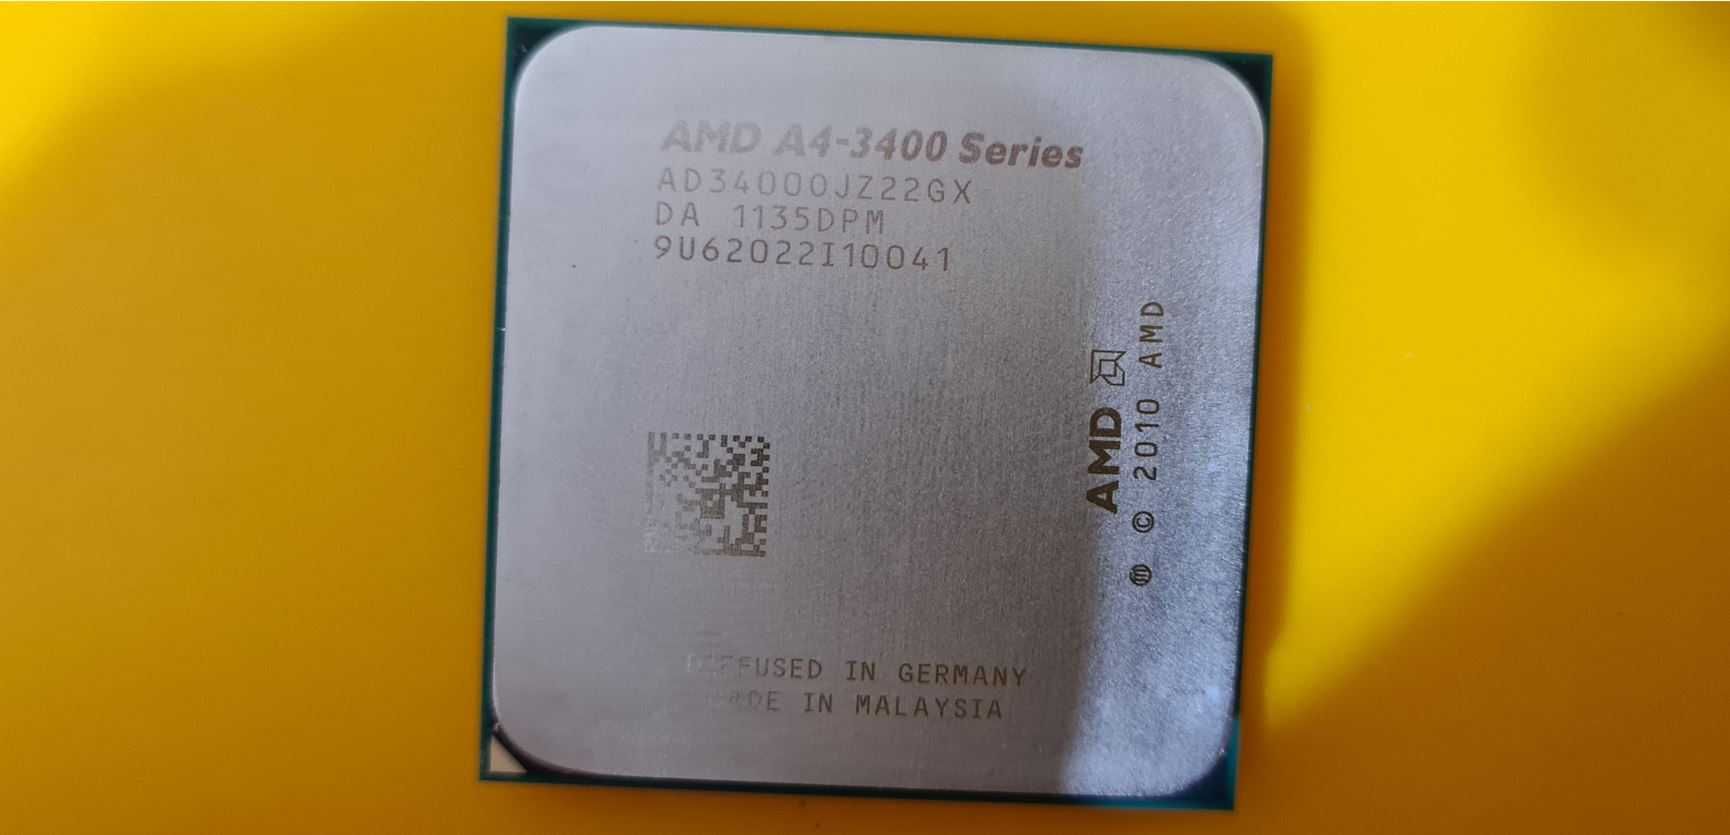 Procesor AMD A4-3400,Dual Core La 2,70Ghz,Socket FM1